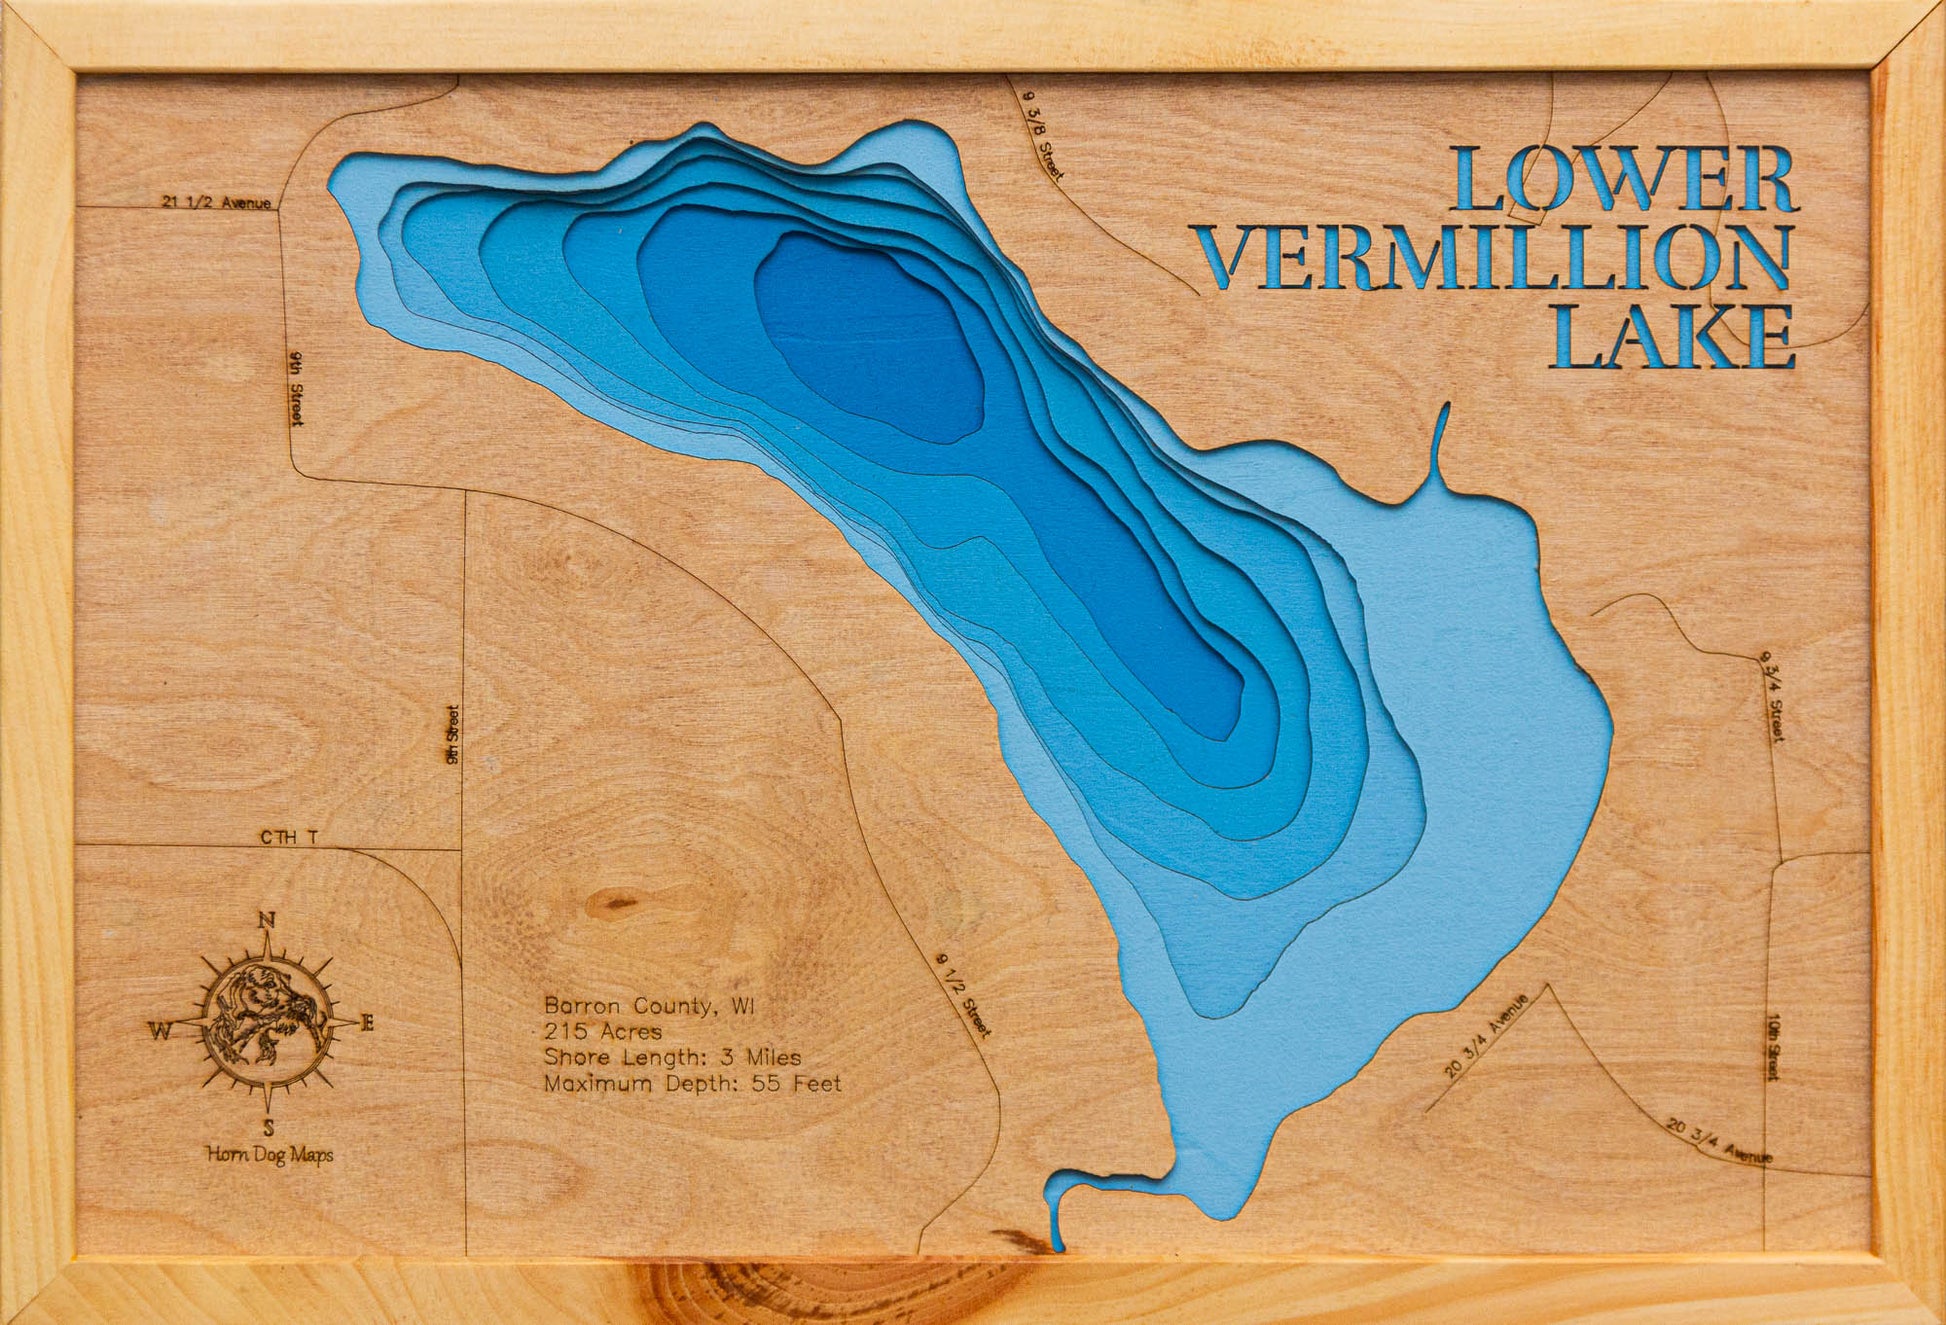 Lower Vermillion Lake in Barron County, WI